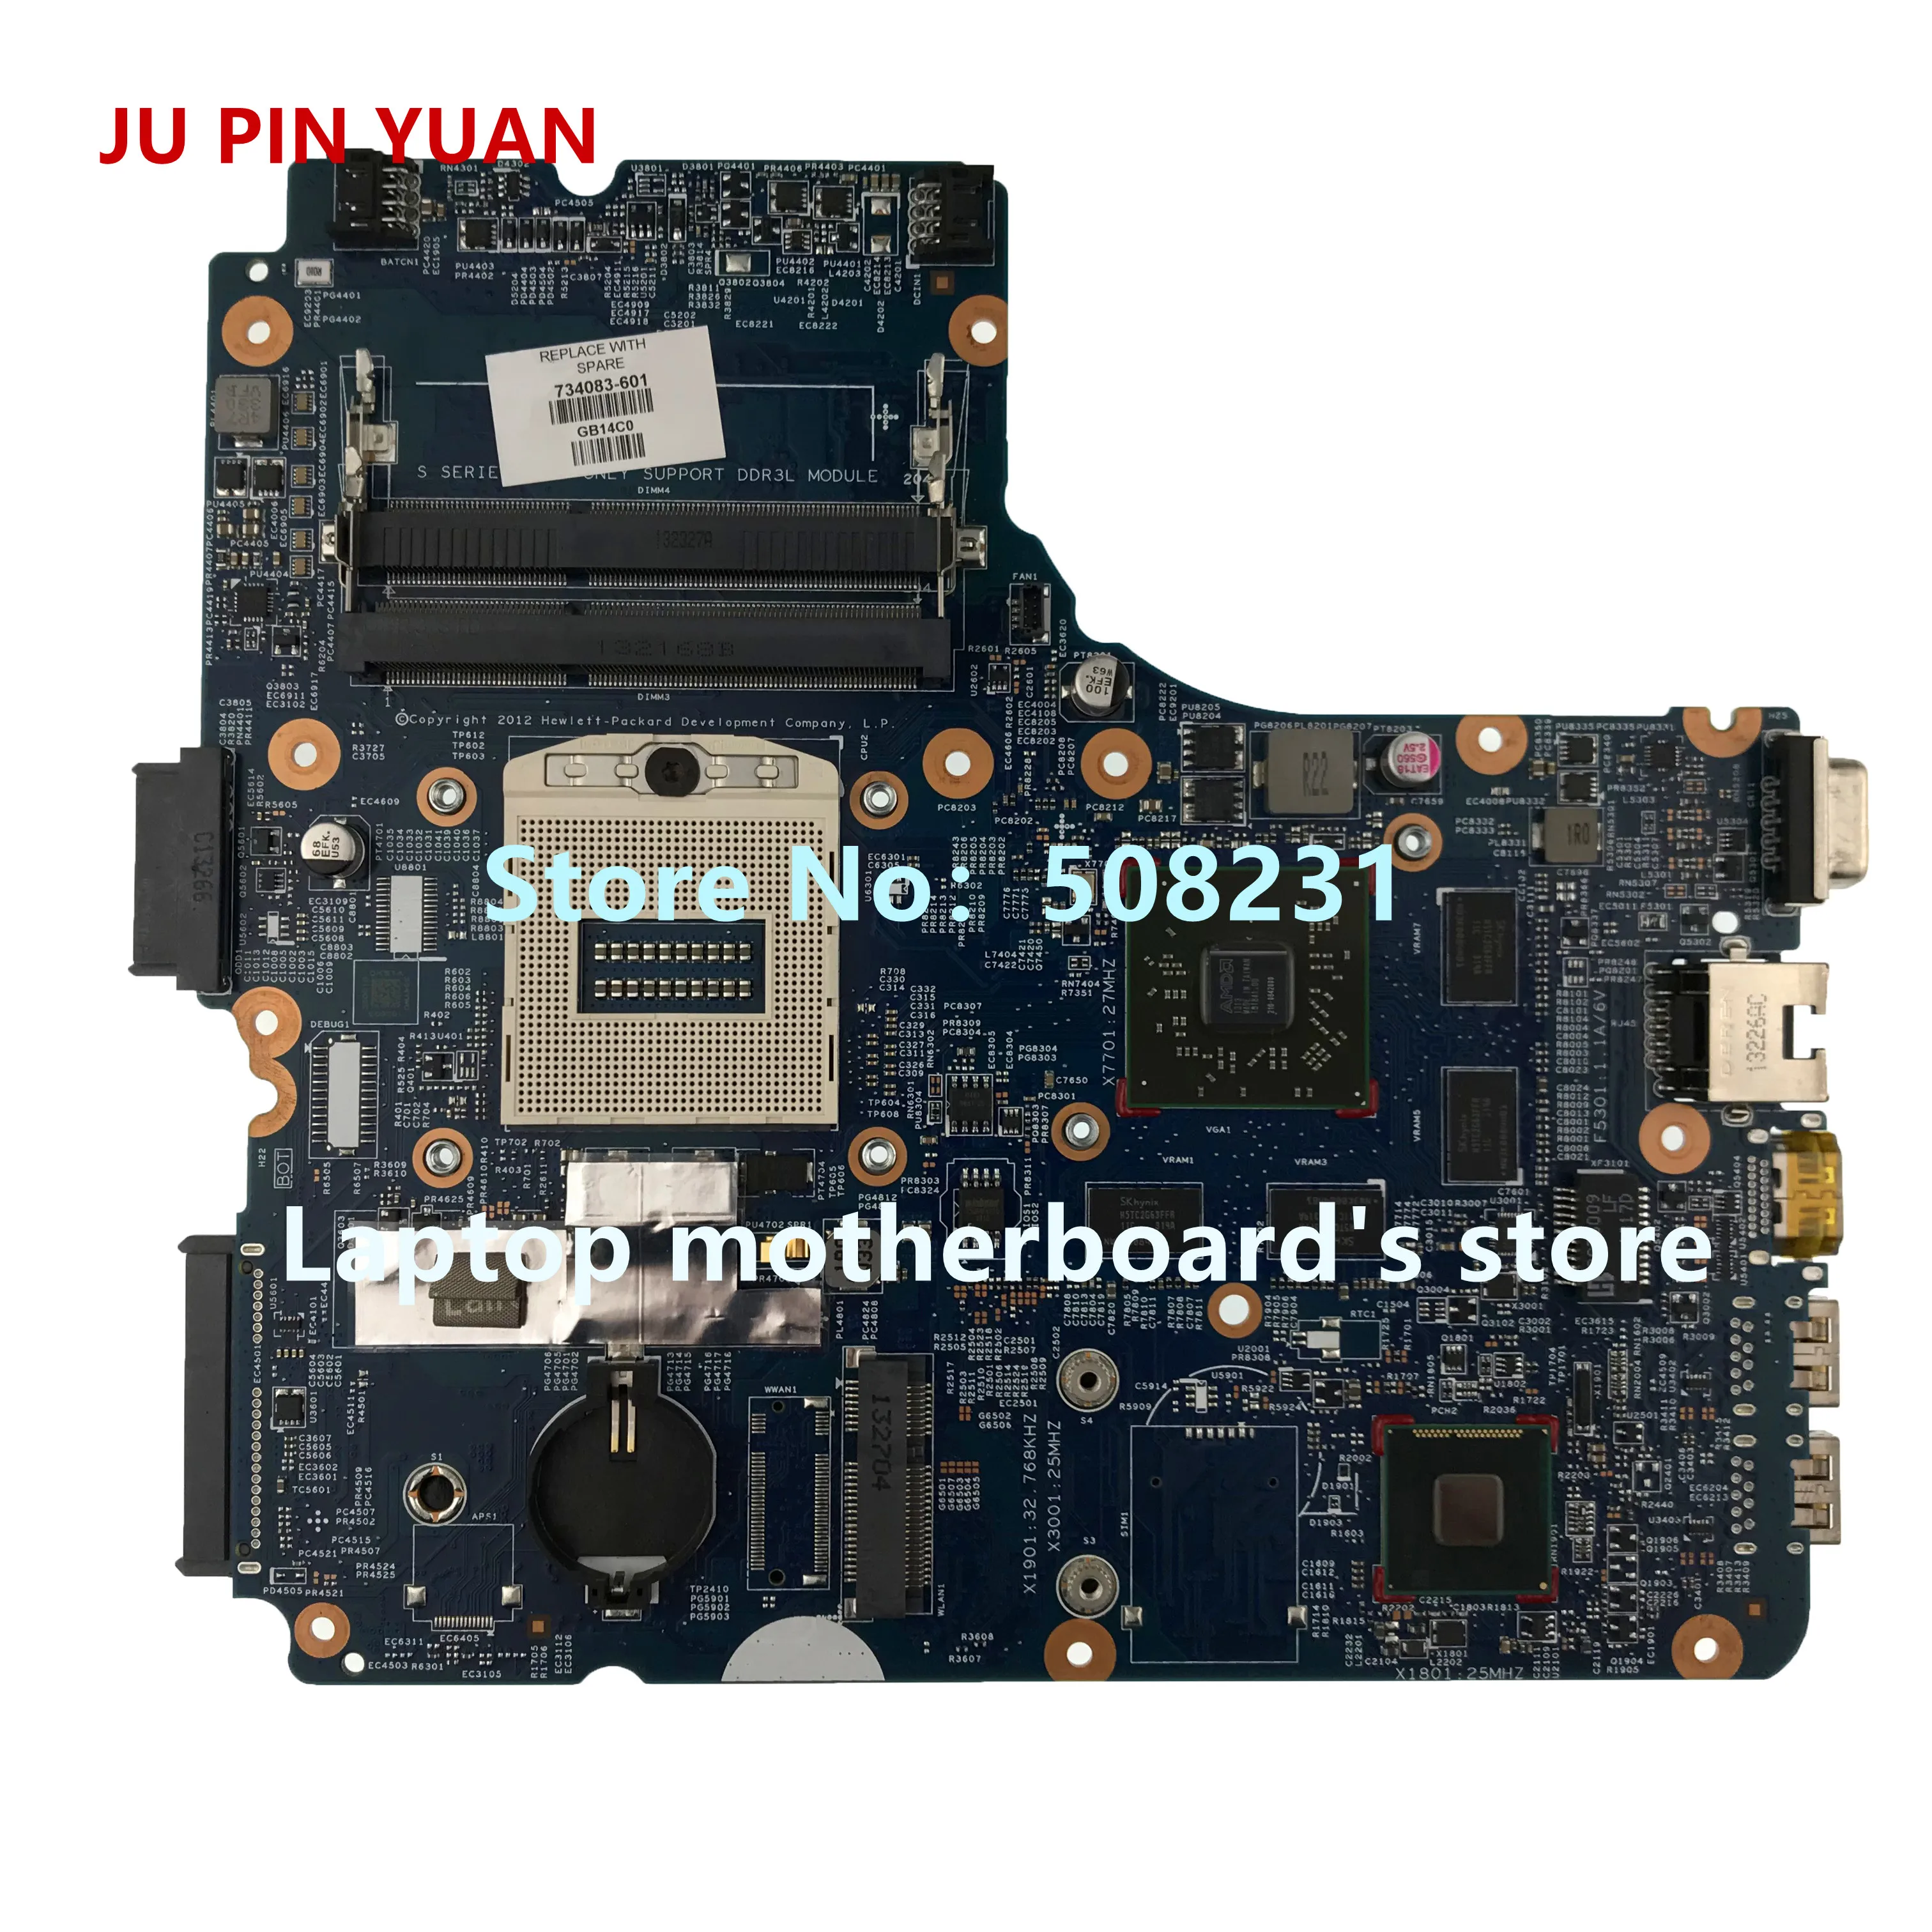 Ju pin yuan L01039-001 L01039-601 DA0X8BMB6F0 материнская плата для ноутбука hp ProBook 430 G5 440 G5 Тетрадь ПК I5-8250U полностью протестирована